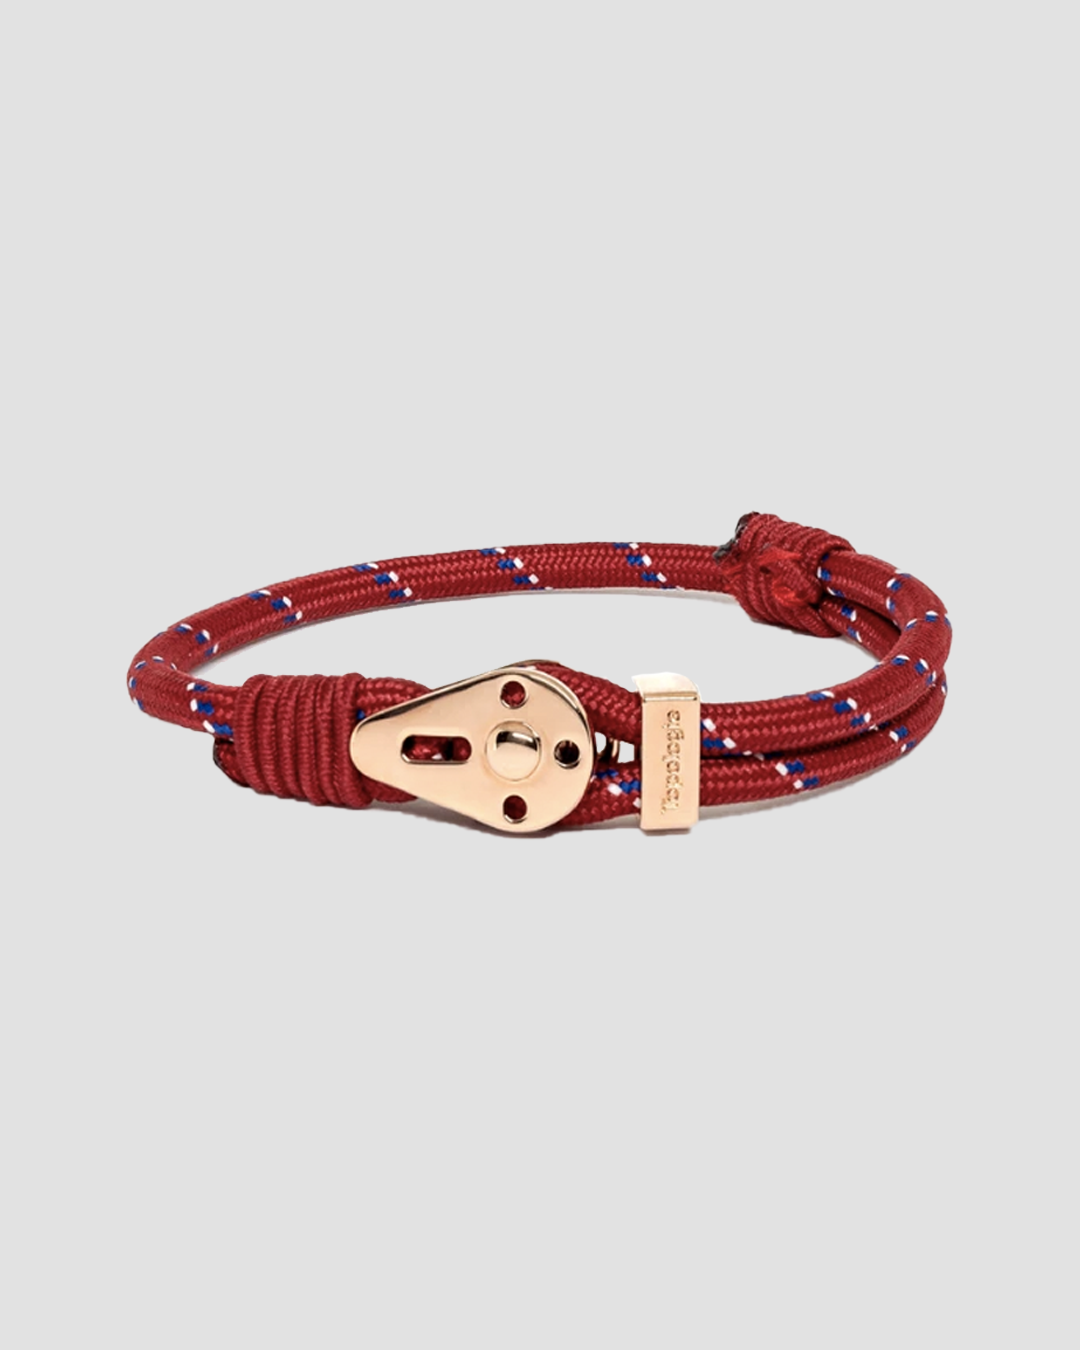 Topologie Bracelets - Yosemite Rose Gold Red Patterned 5mm